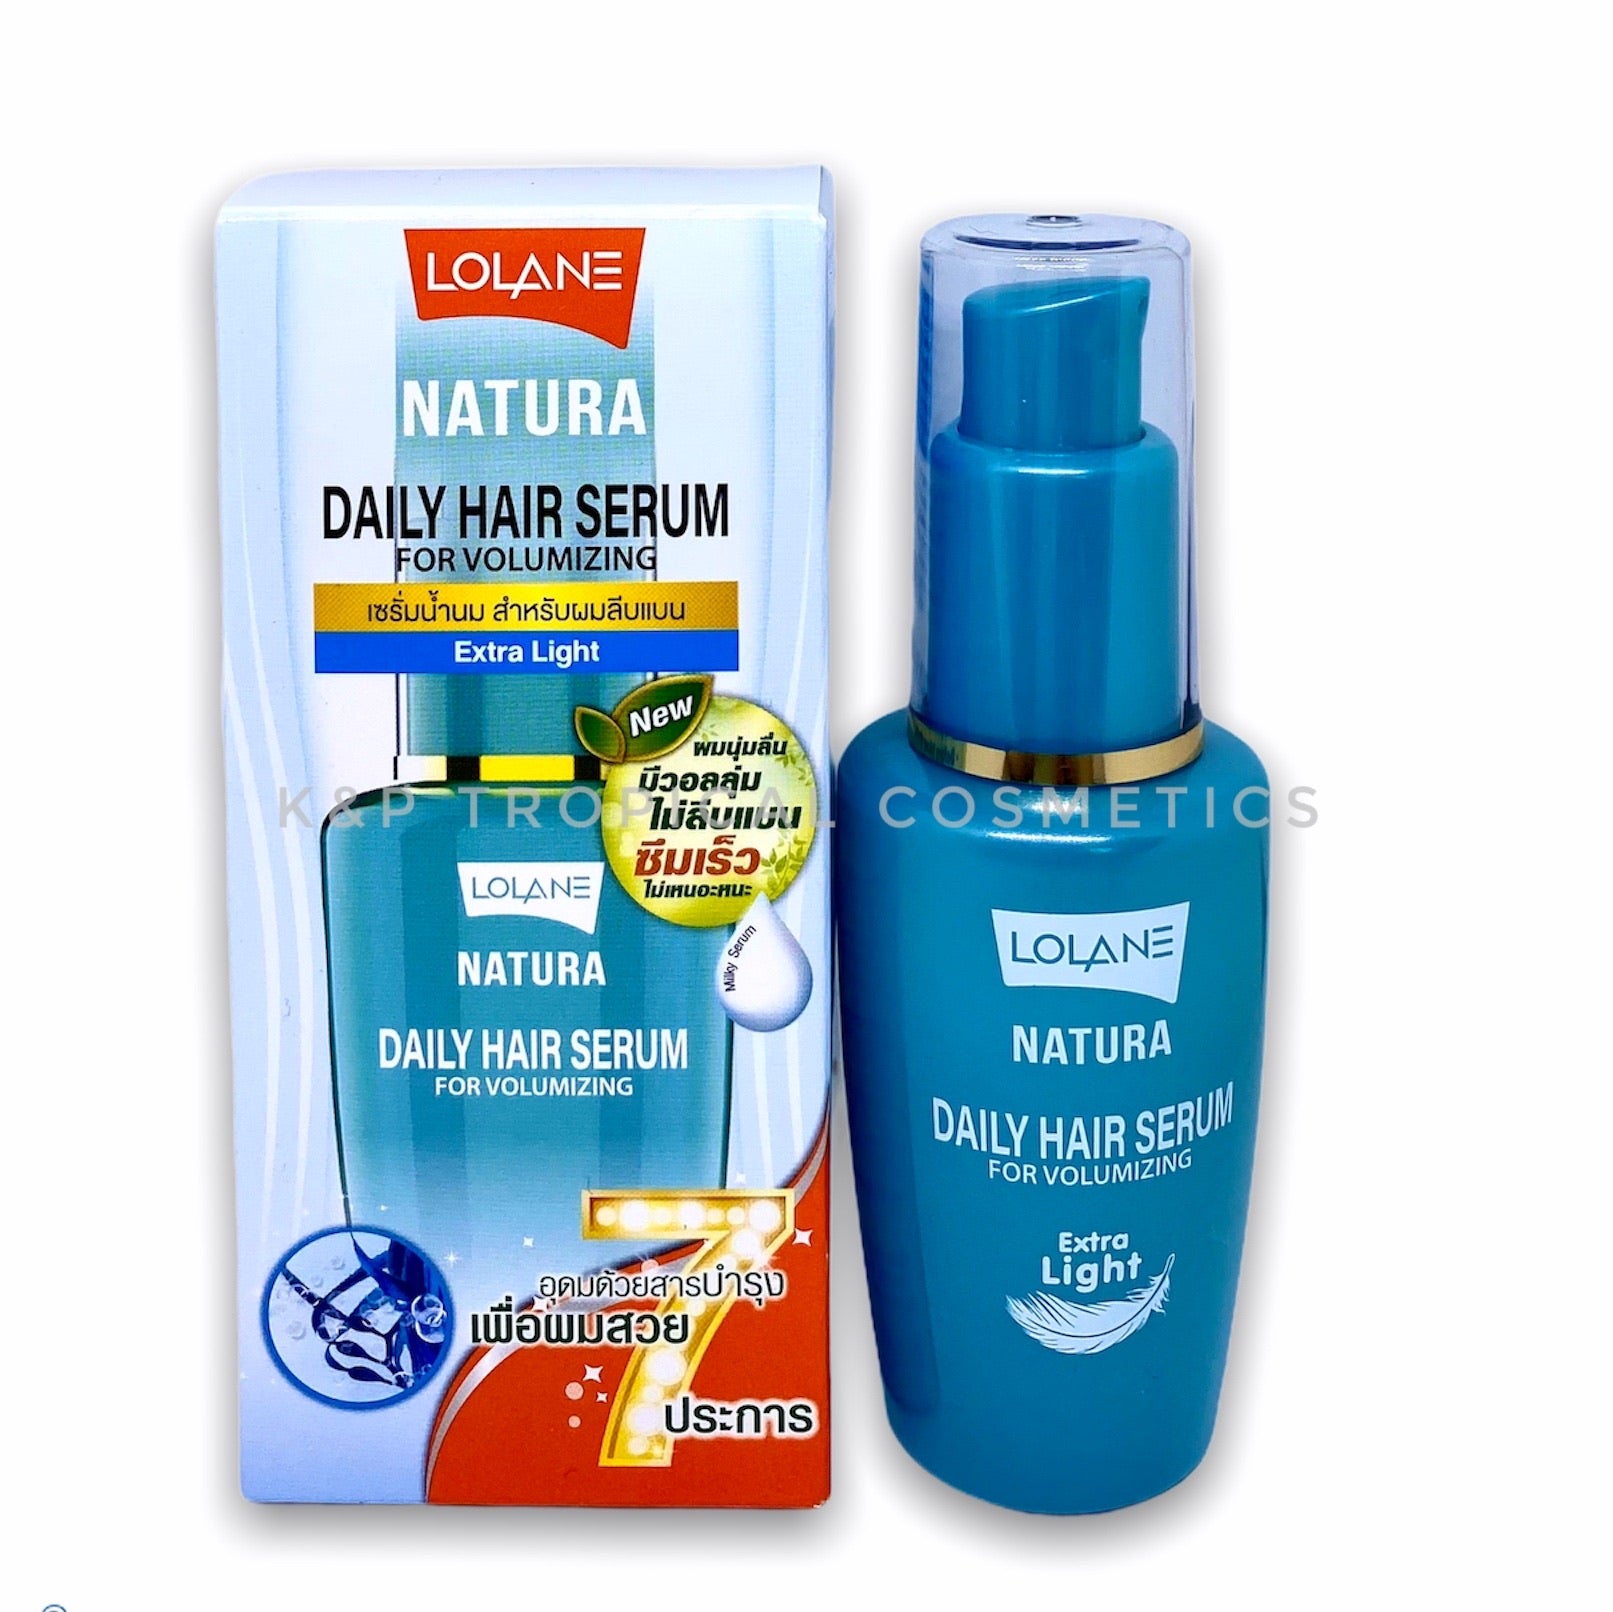 LOLANE Natura Daily Hair Serum For Volumizing (blue) 50 ml., Восстанавливающая сыворотка с экстралегкой формулой для объема волос 50 мл.